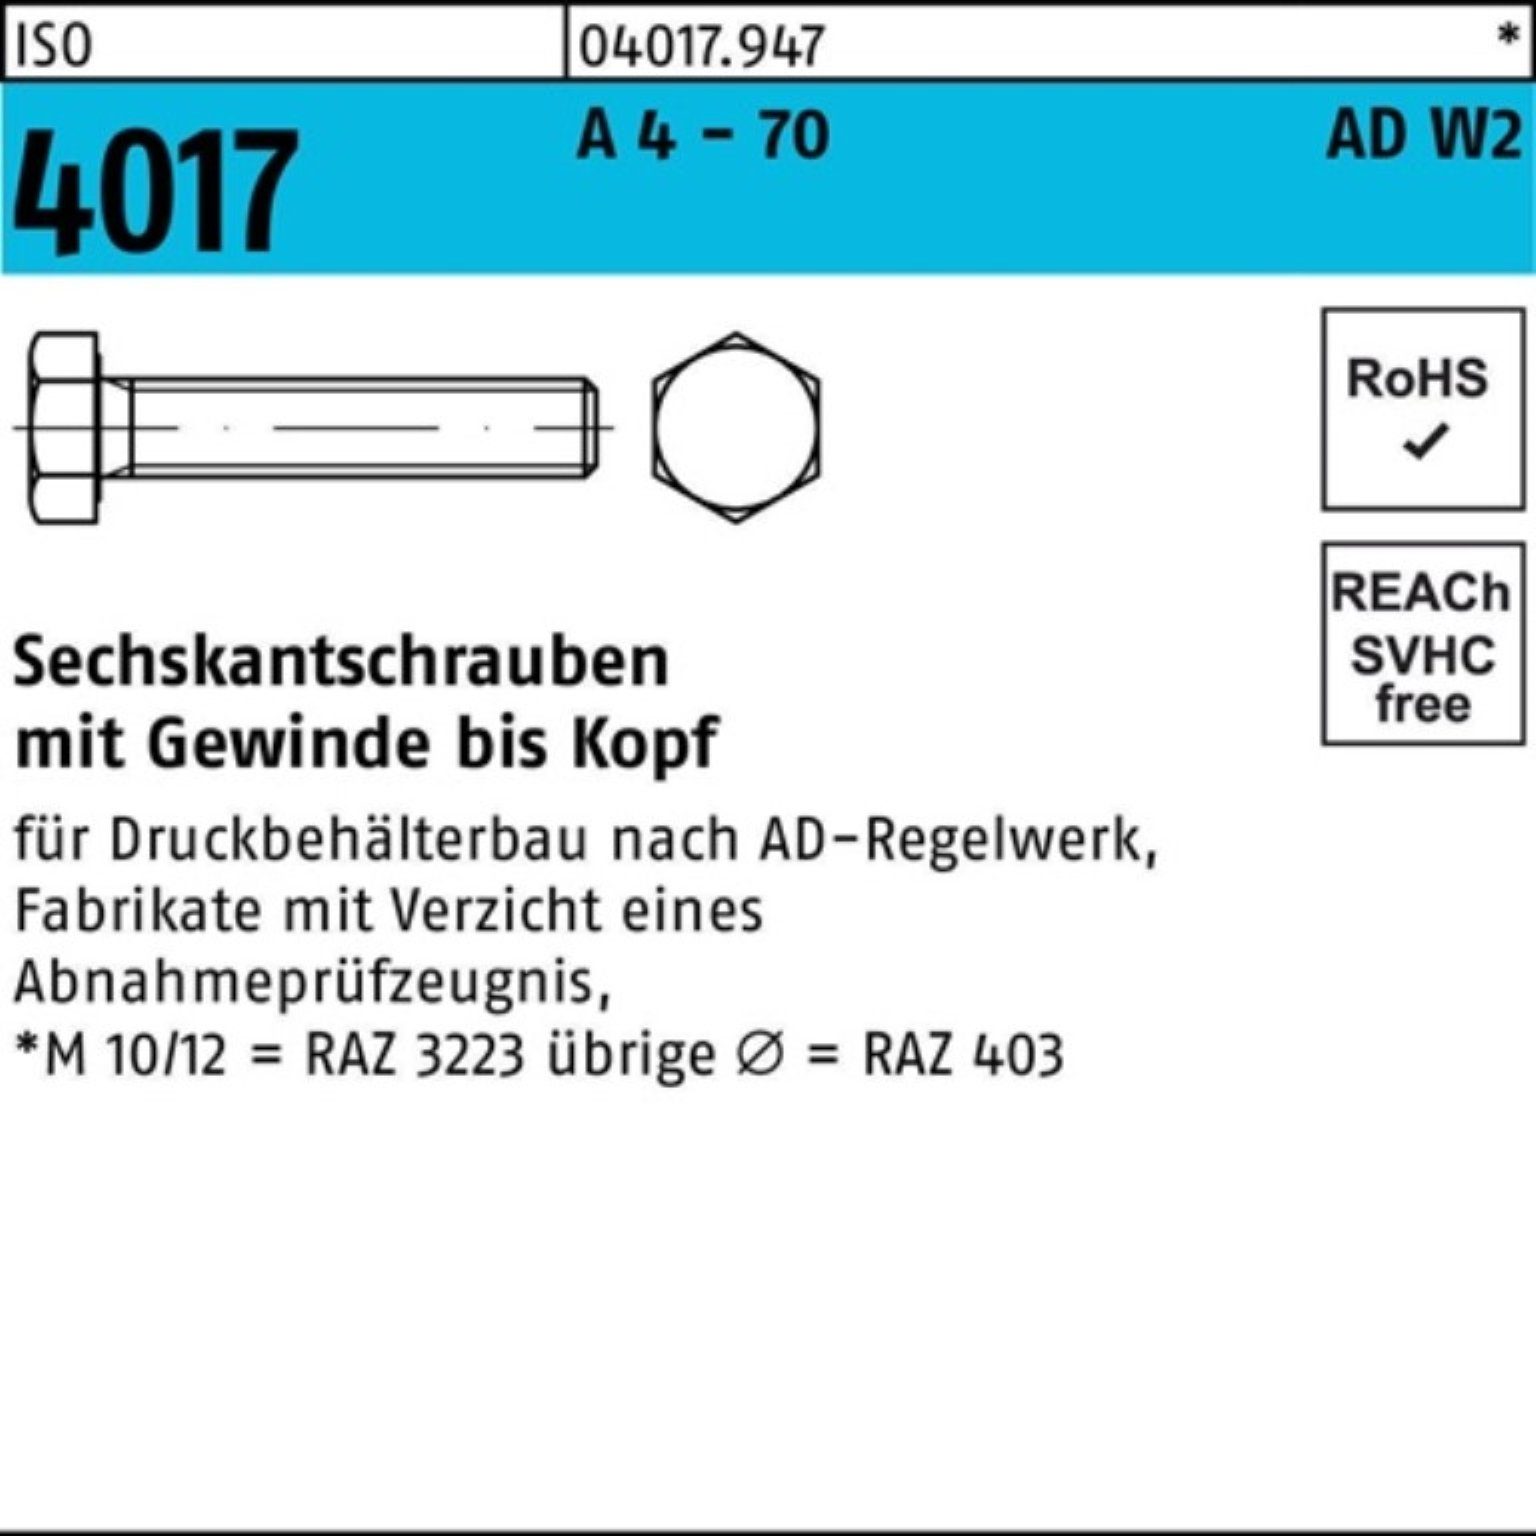 Bufab Sechskantschraube AD-W2 4017 100er VG A - M10x 4 100 70 Sechskantschraube ISO Pack St 20